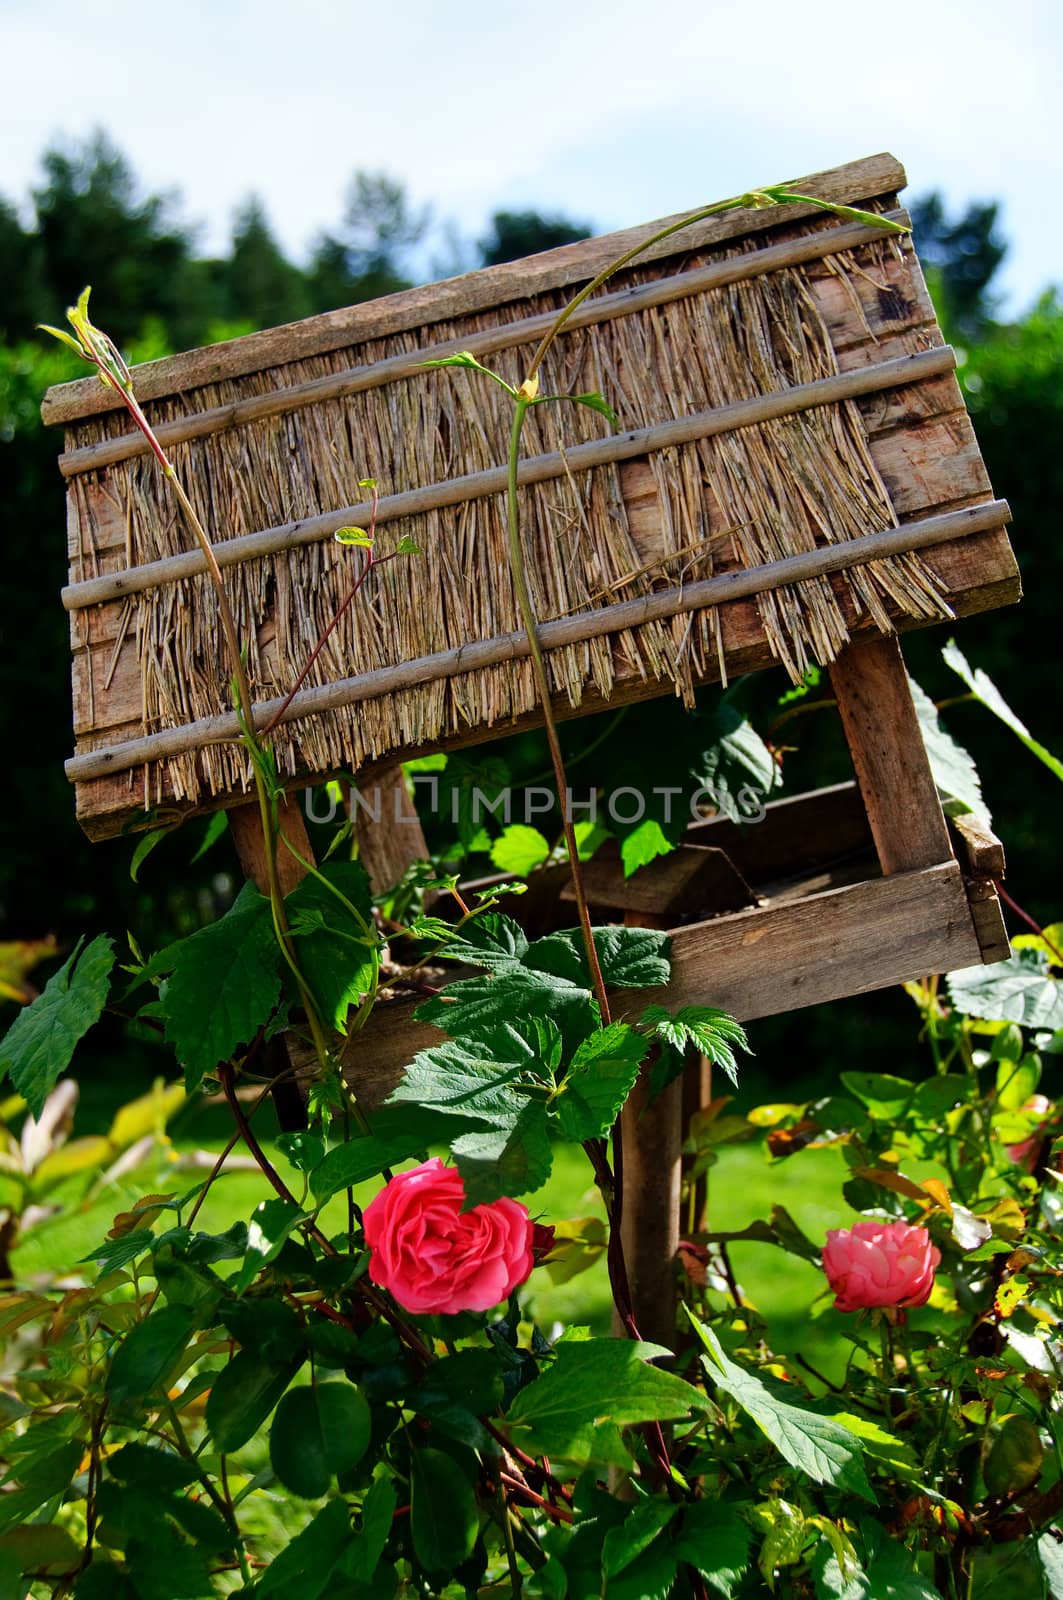 An overgrown bird house with roses